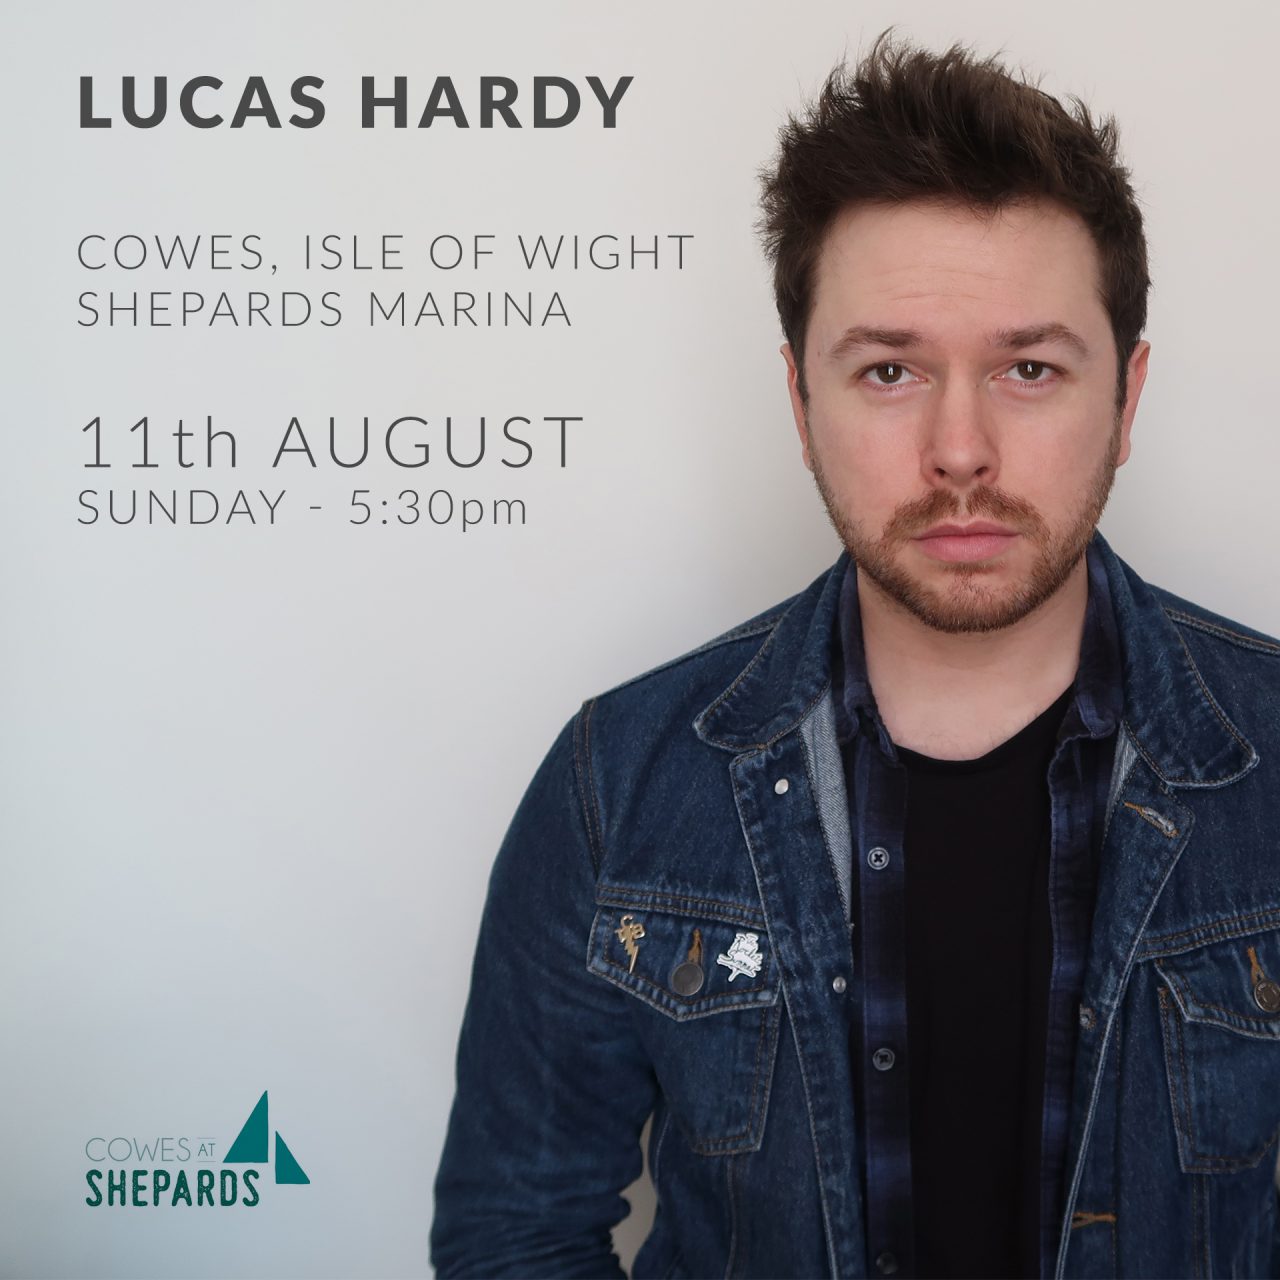 Lucas Hardy - Cowes Week Aug 11 Shepards Marina